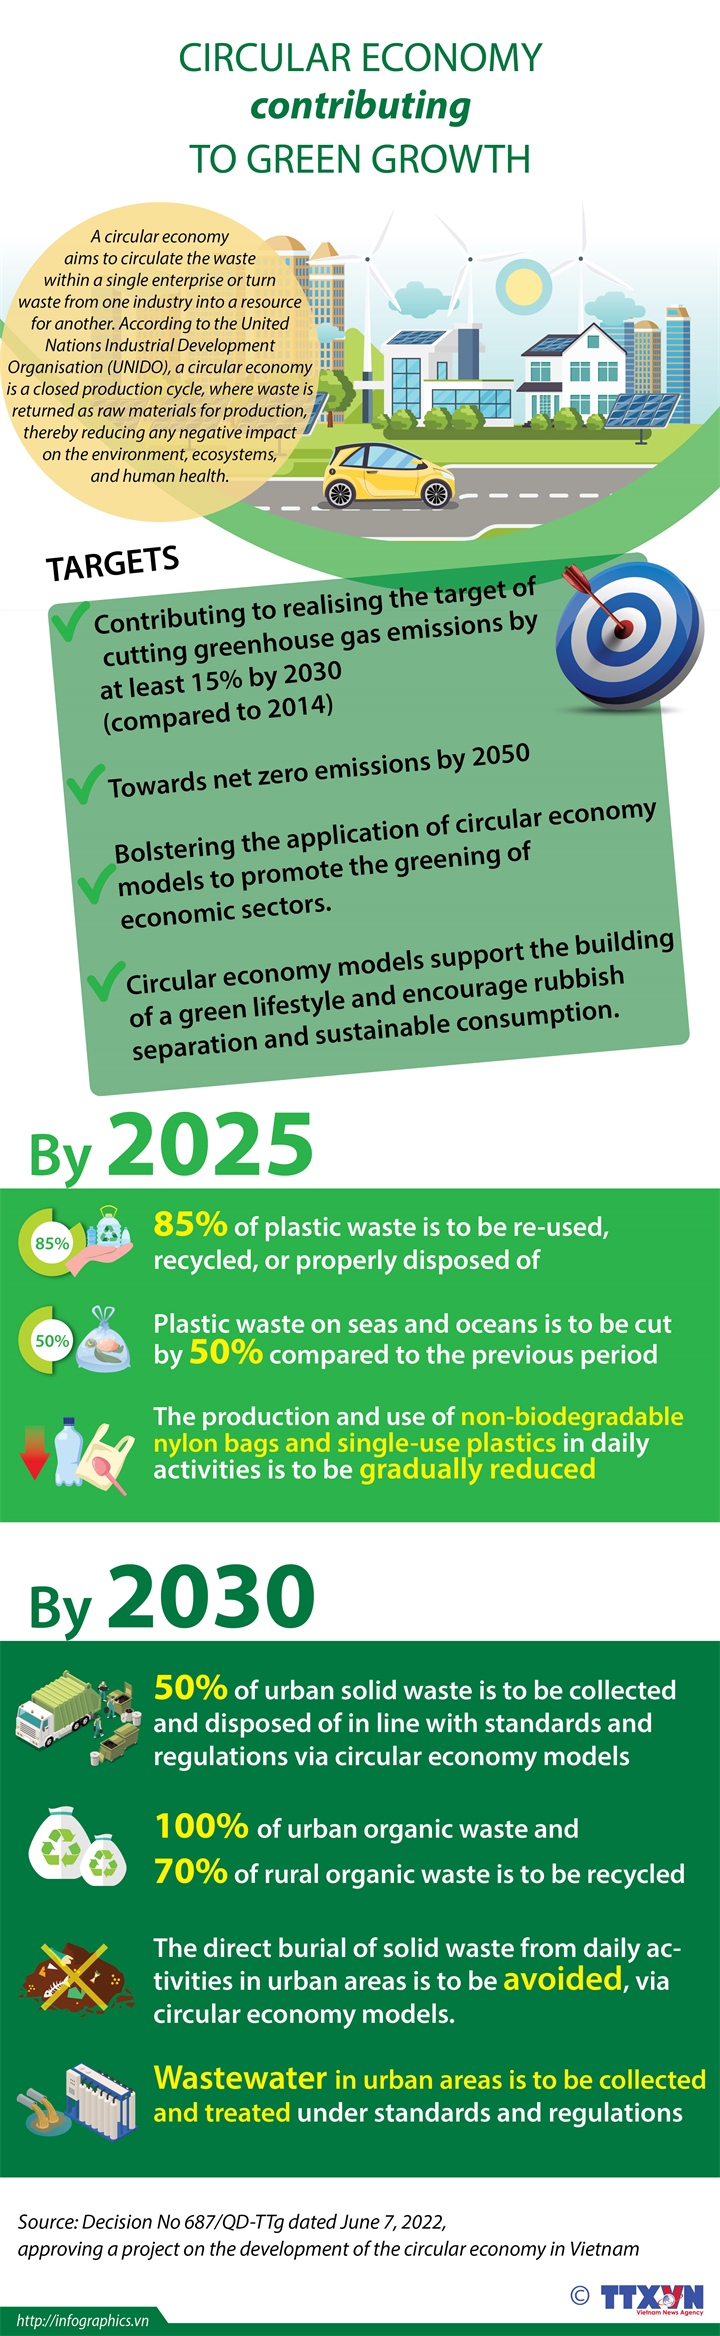 Circular economy contributing to green growth